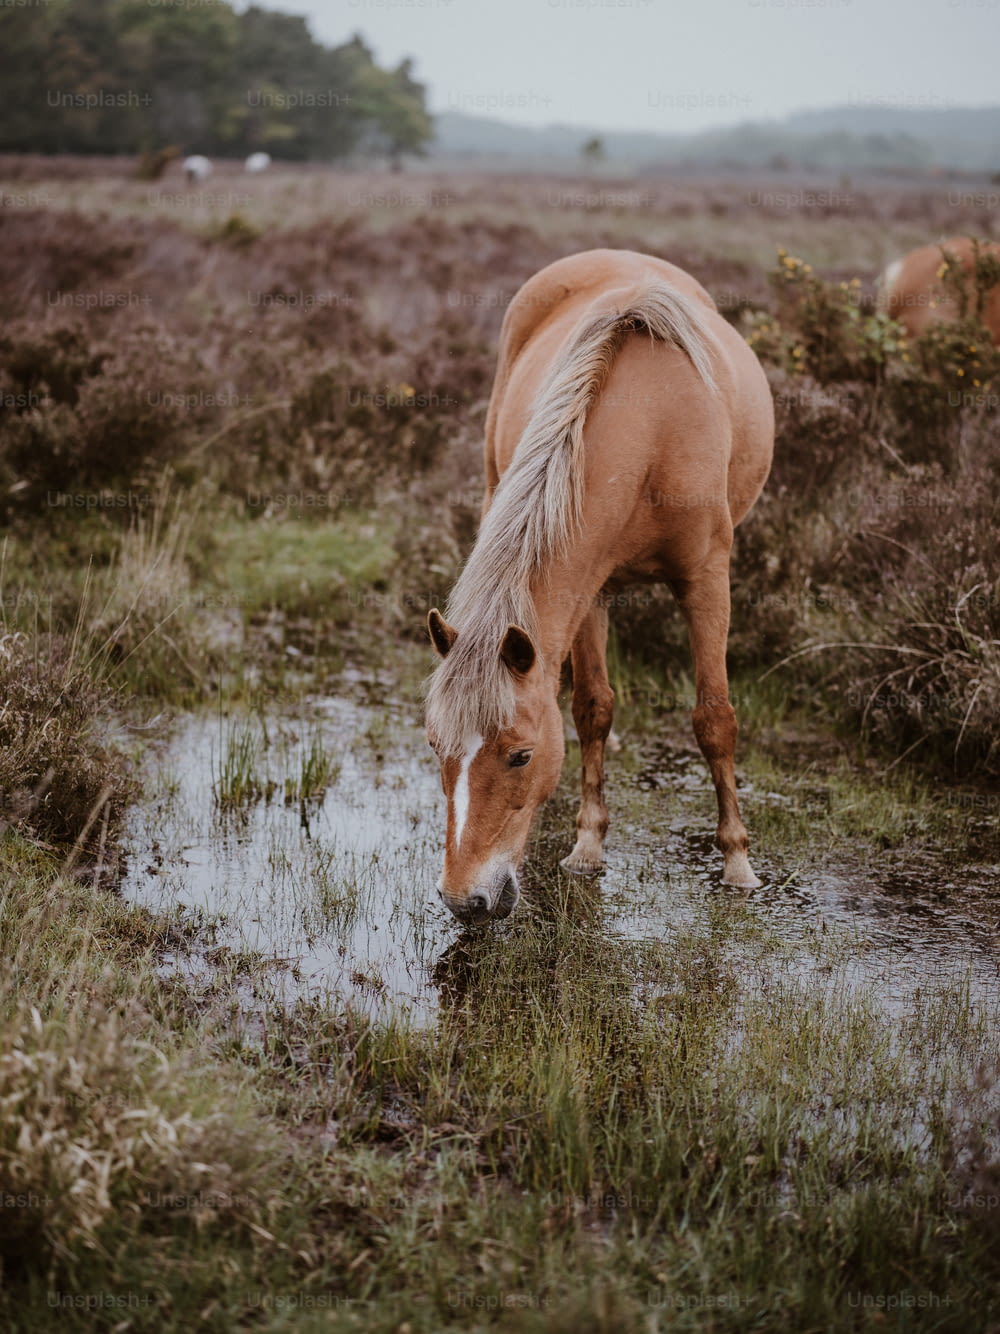 Un caballo bebiendo agua de un charco en un campo